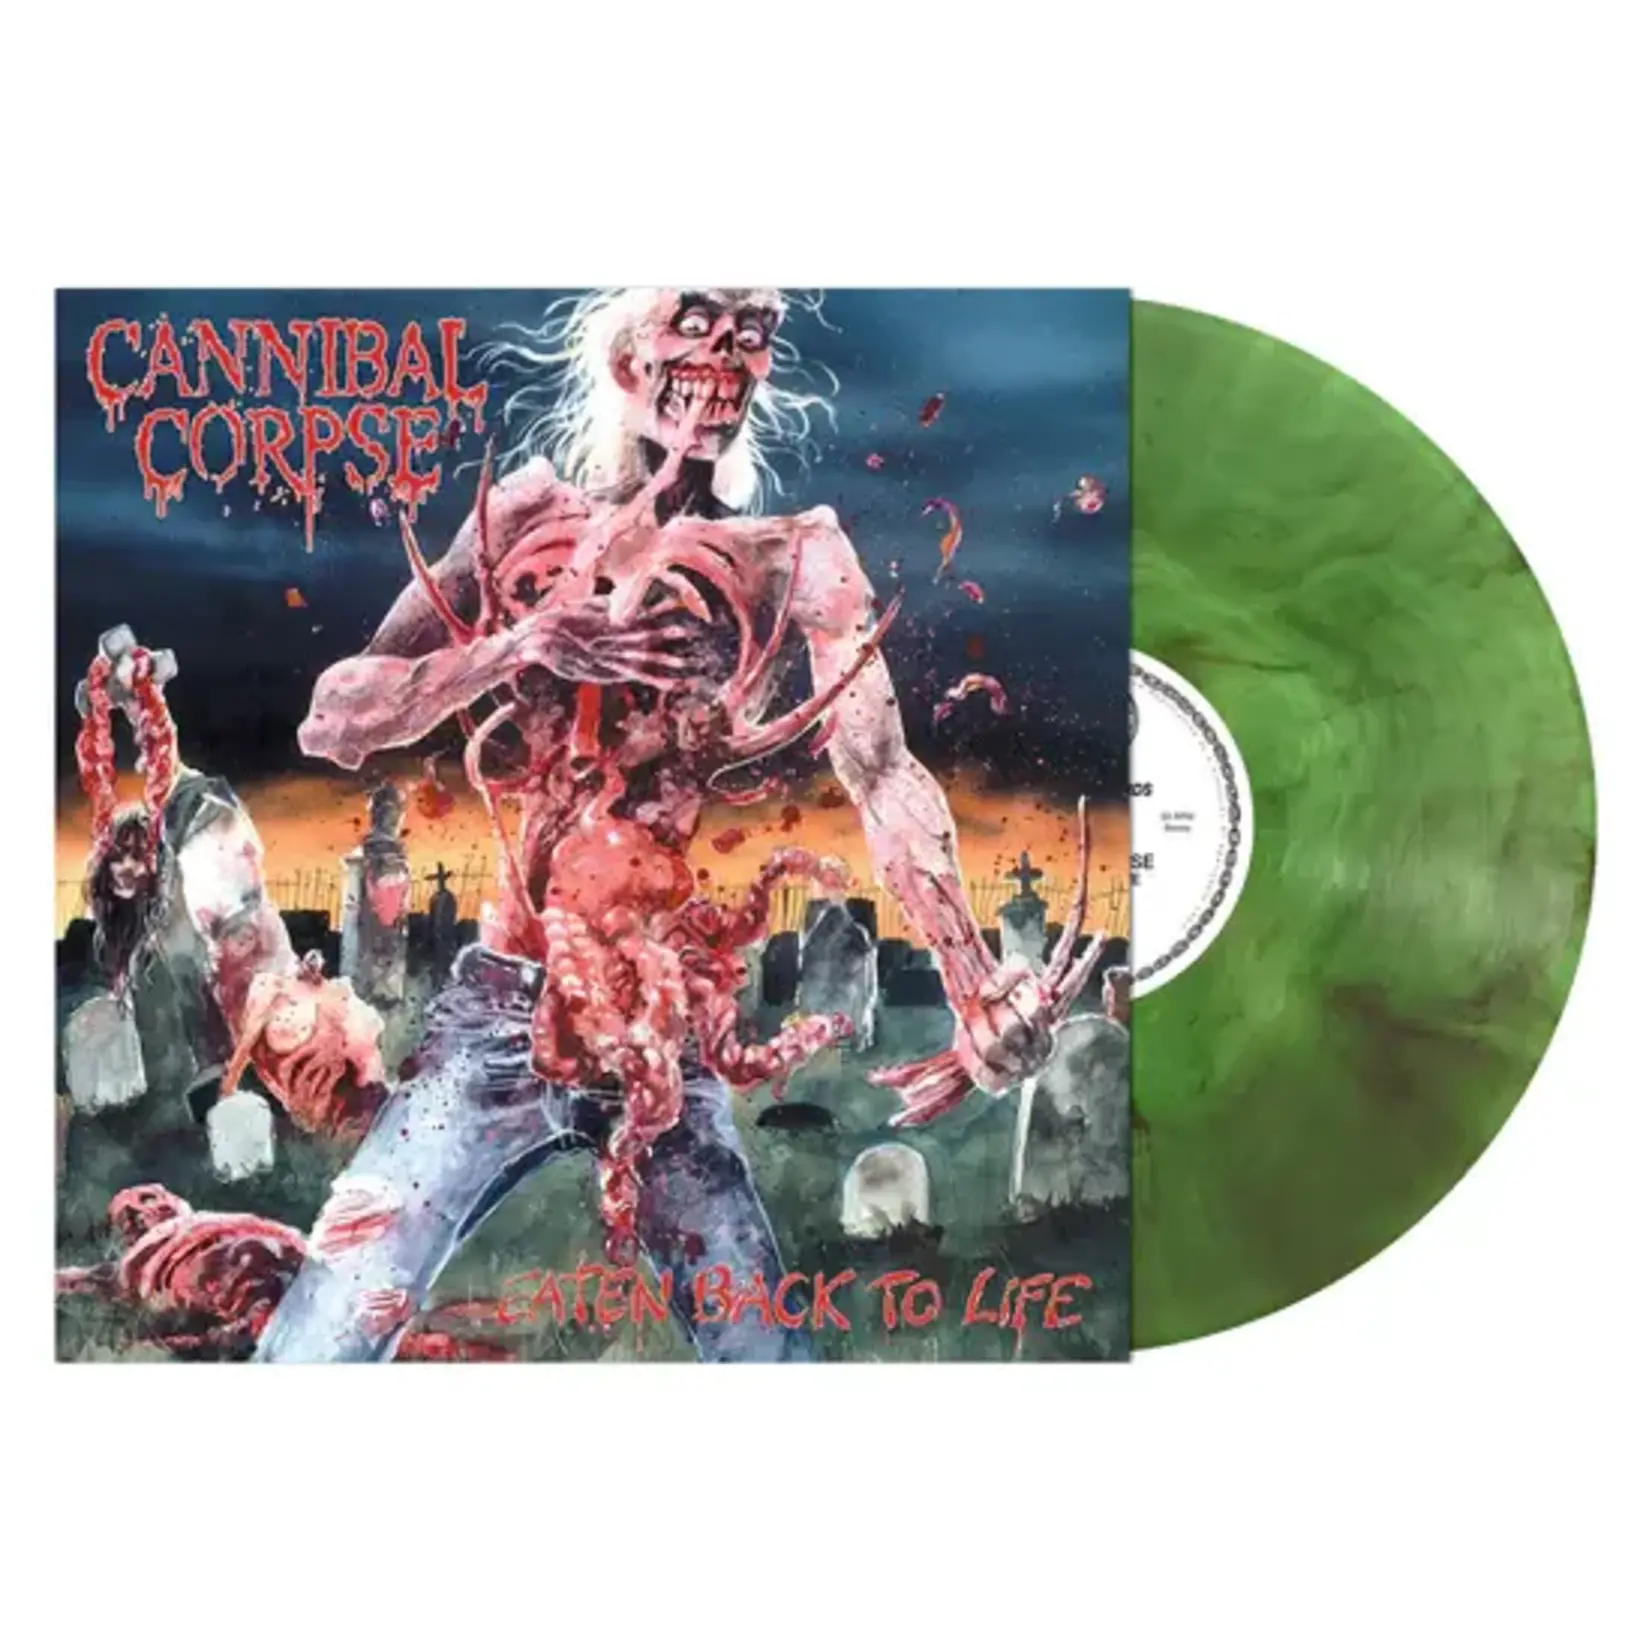 Cannibal Corpse - Eaten Back To Life (Green Vinyl) [LP]